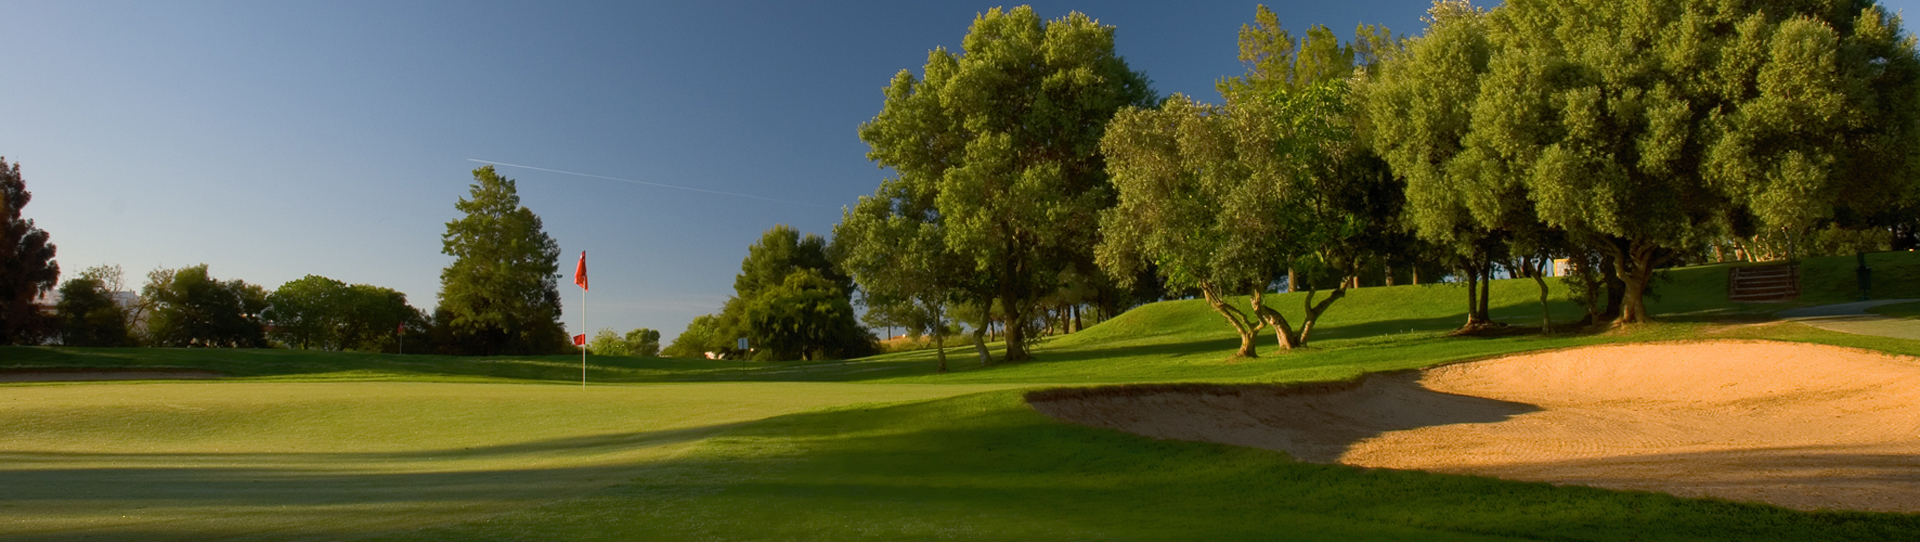 Portugal golf holidays - Pestana Golf | Buggy Included - Photo 2